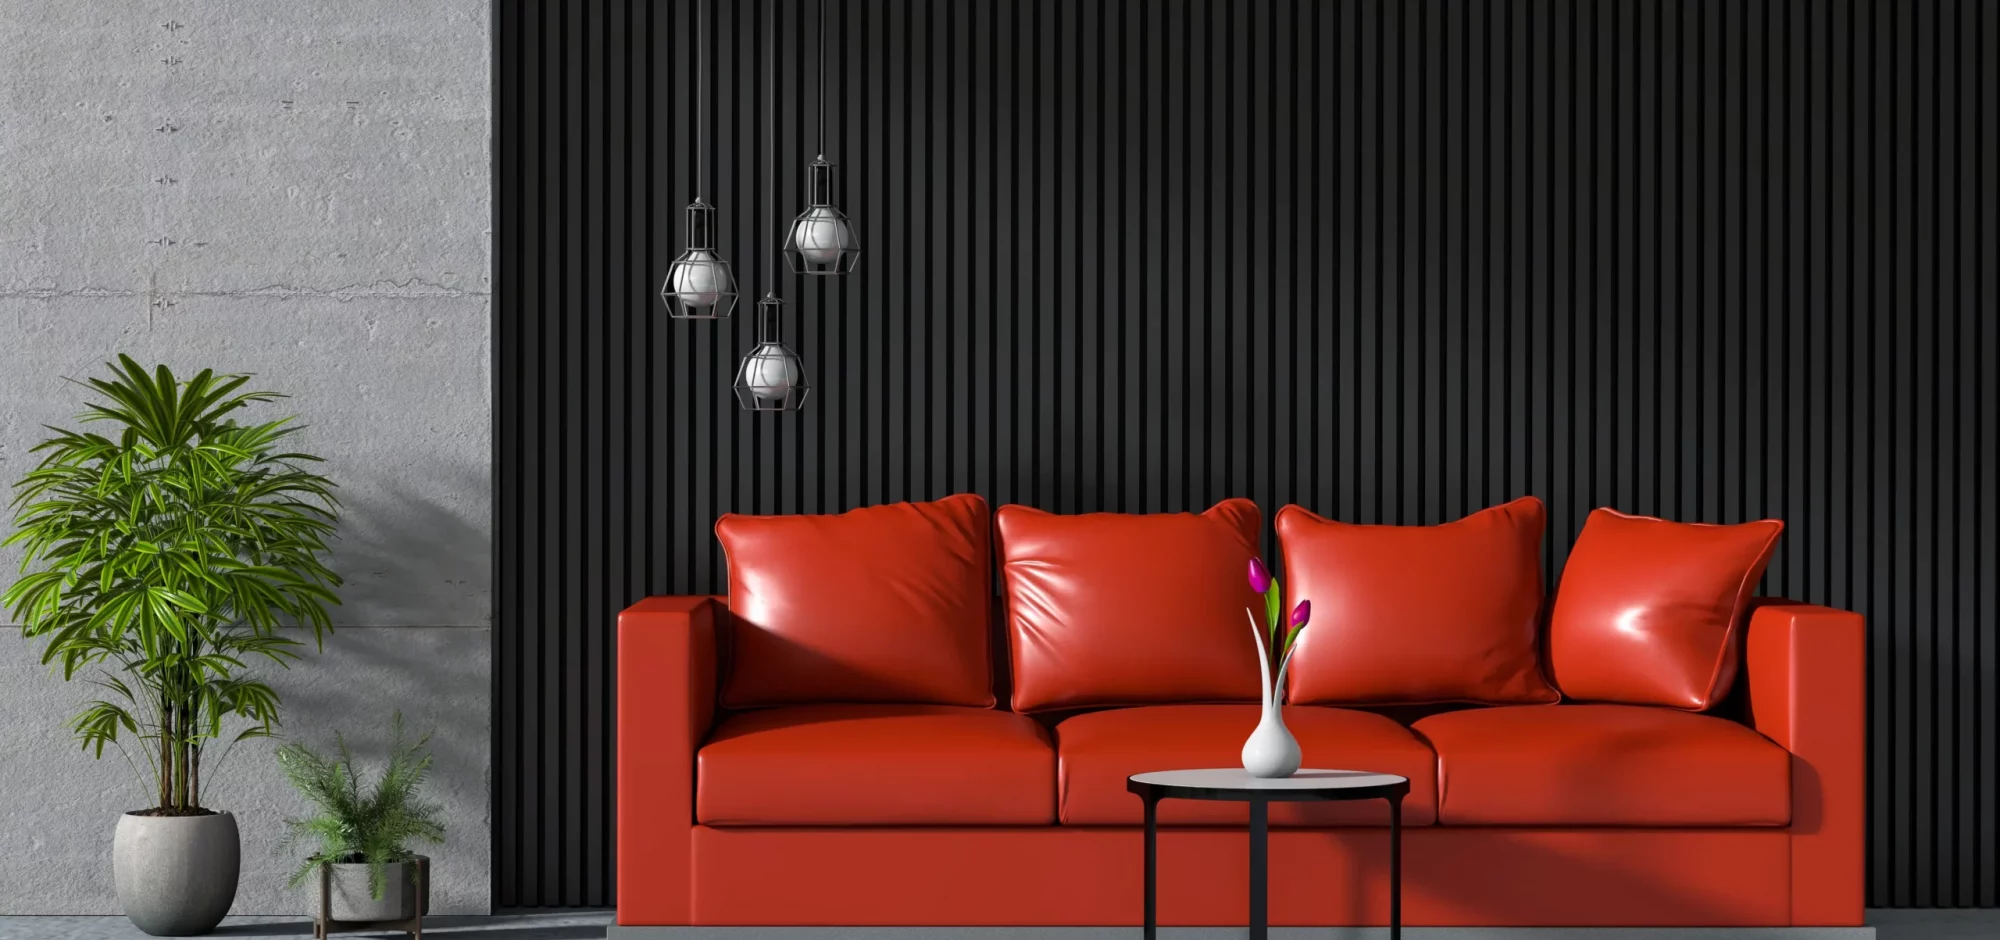 Red Leather Sofa 2 (1)ultimatedesignguide